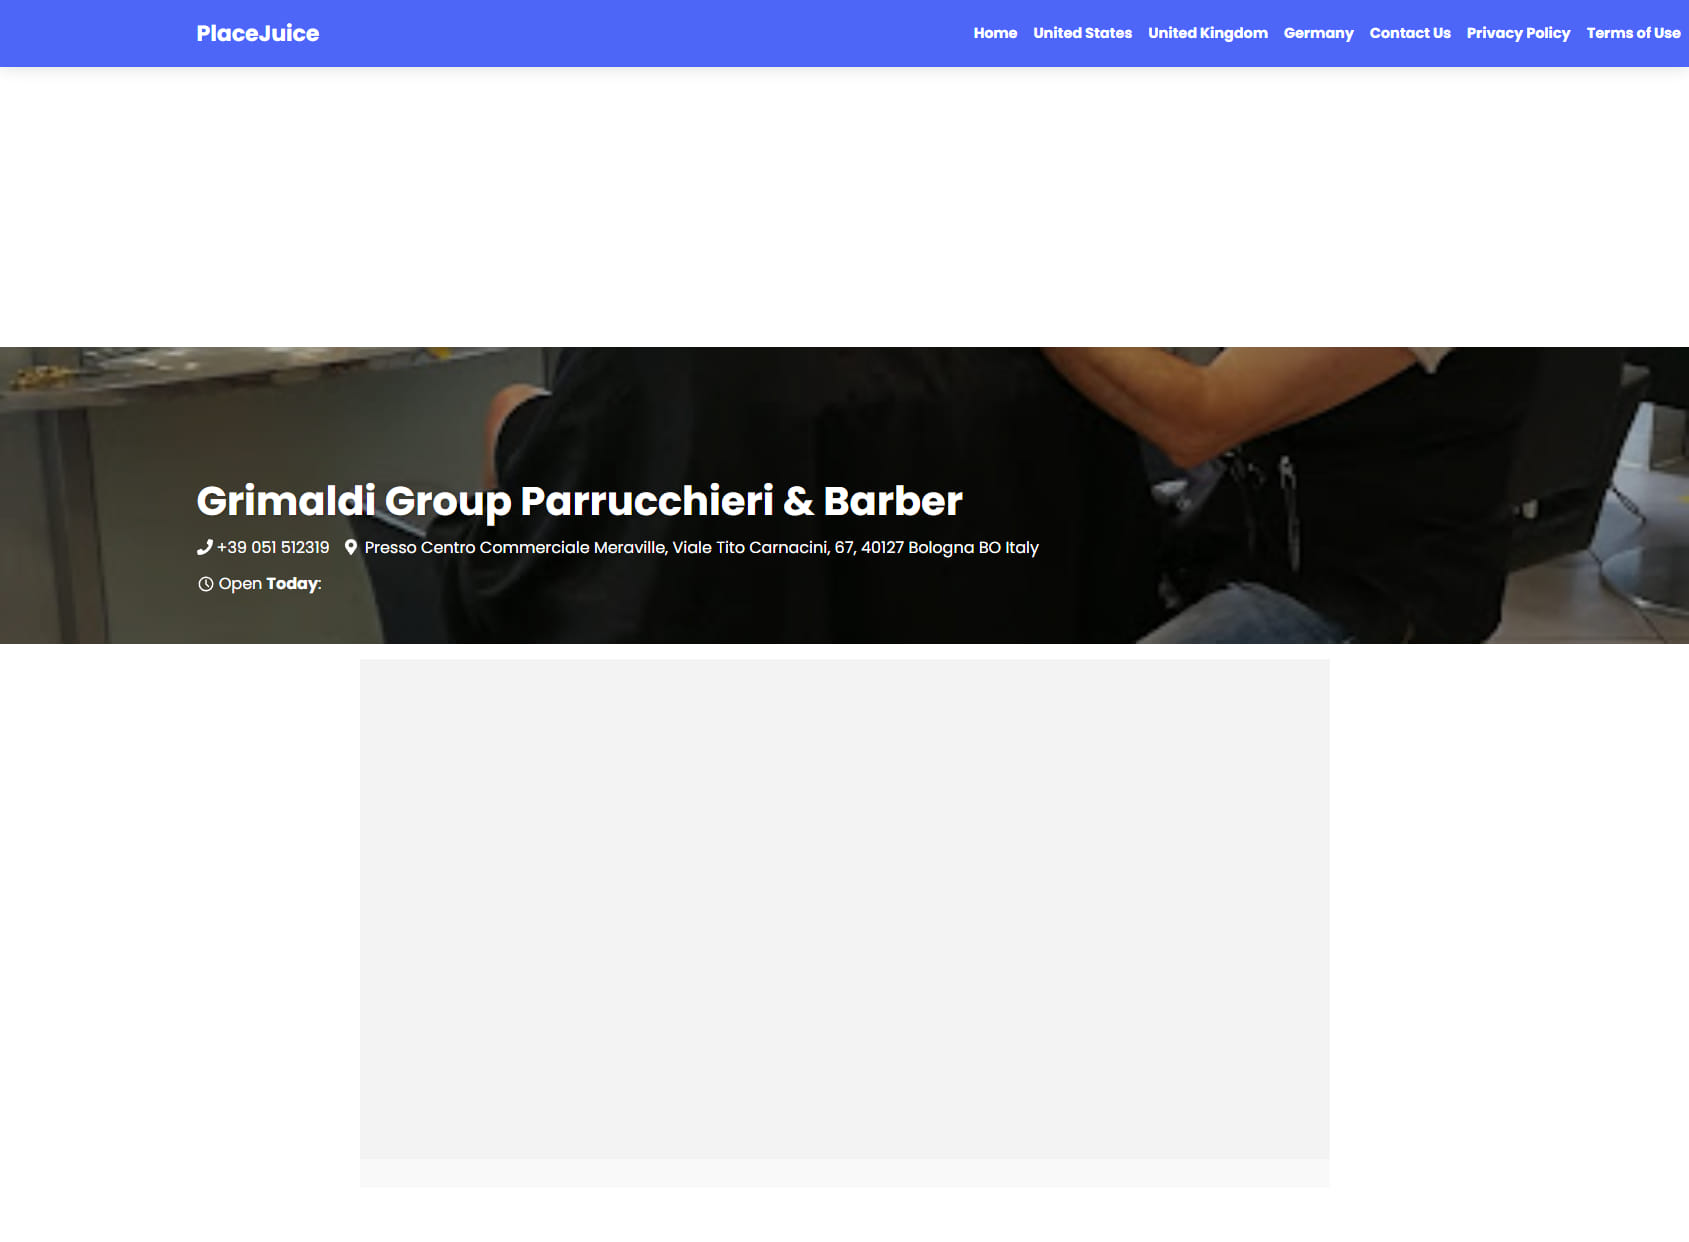 Grimaldi Group Parrucchieri & Barber